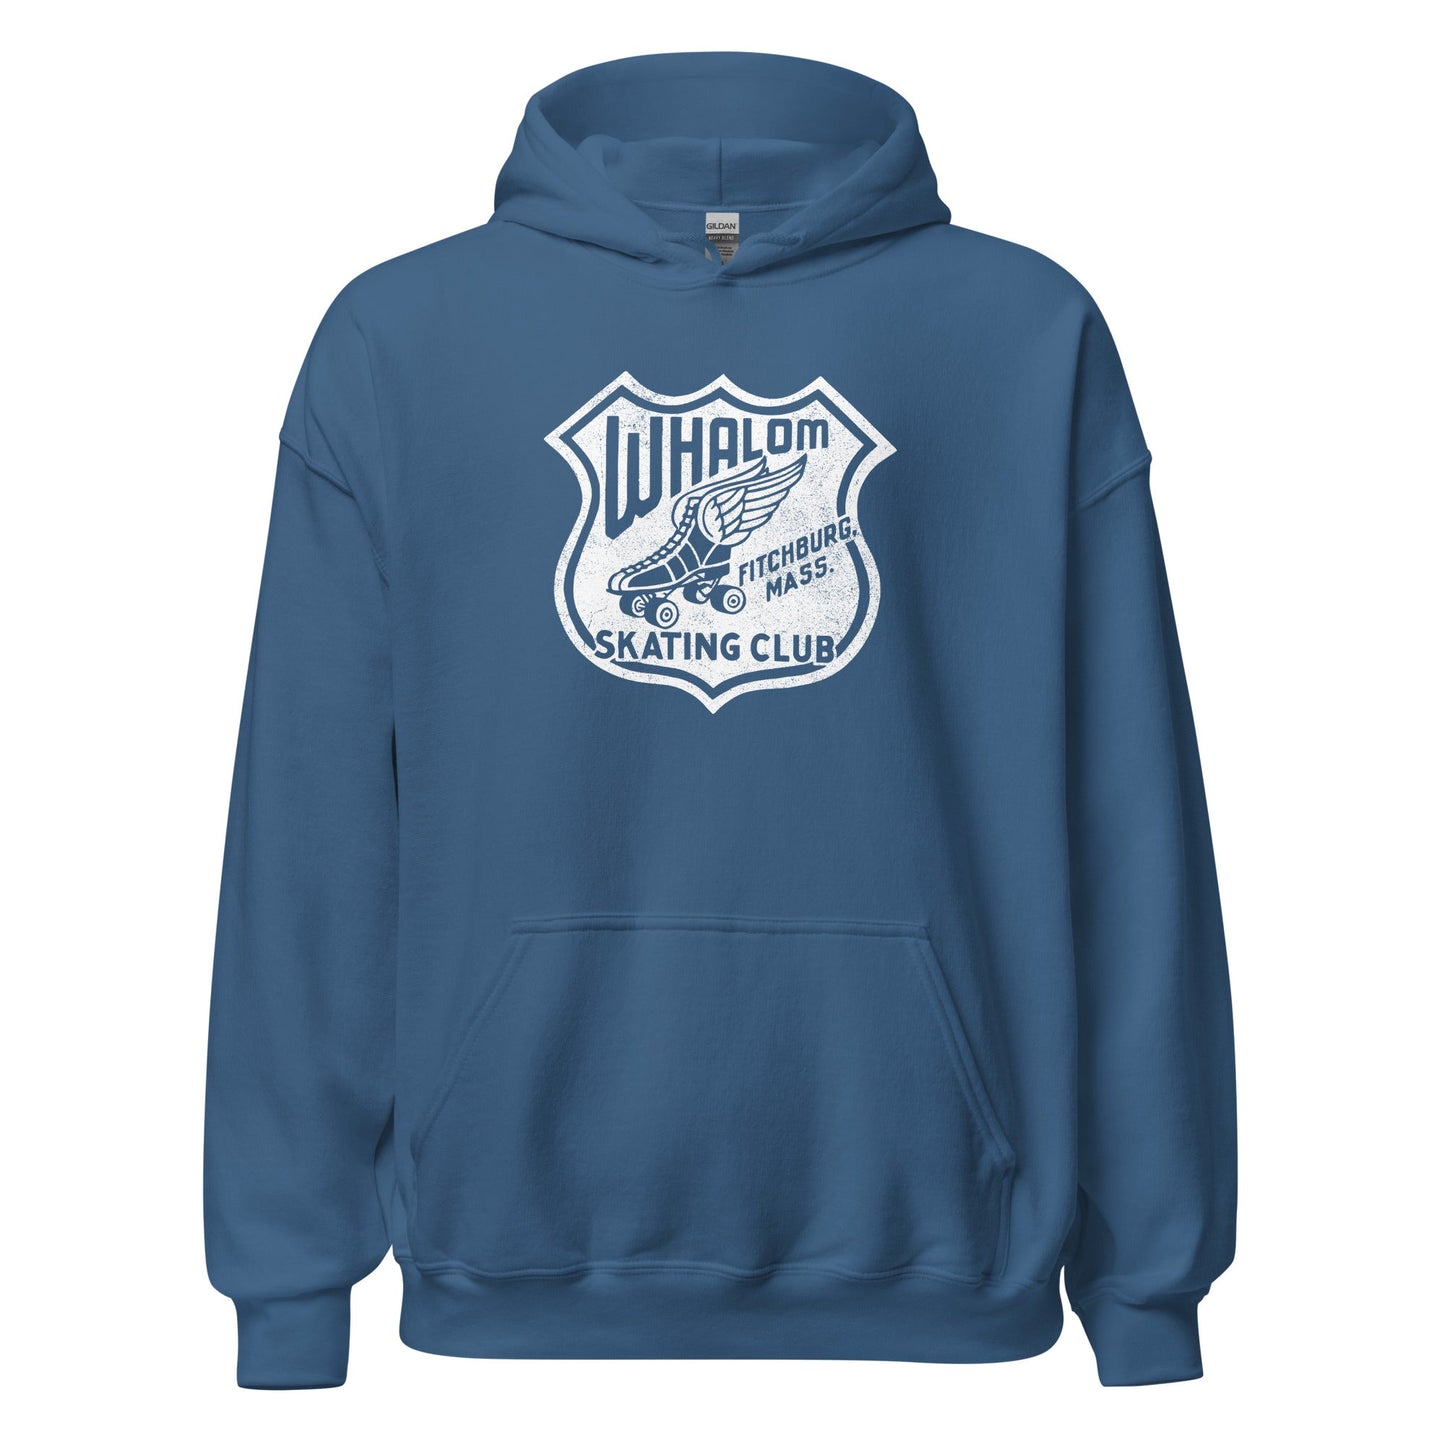 Whalom Skating Club Hoodie - Fitchburg, MA | Vintage Roller Skating Graphic Sweatshirt